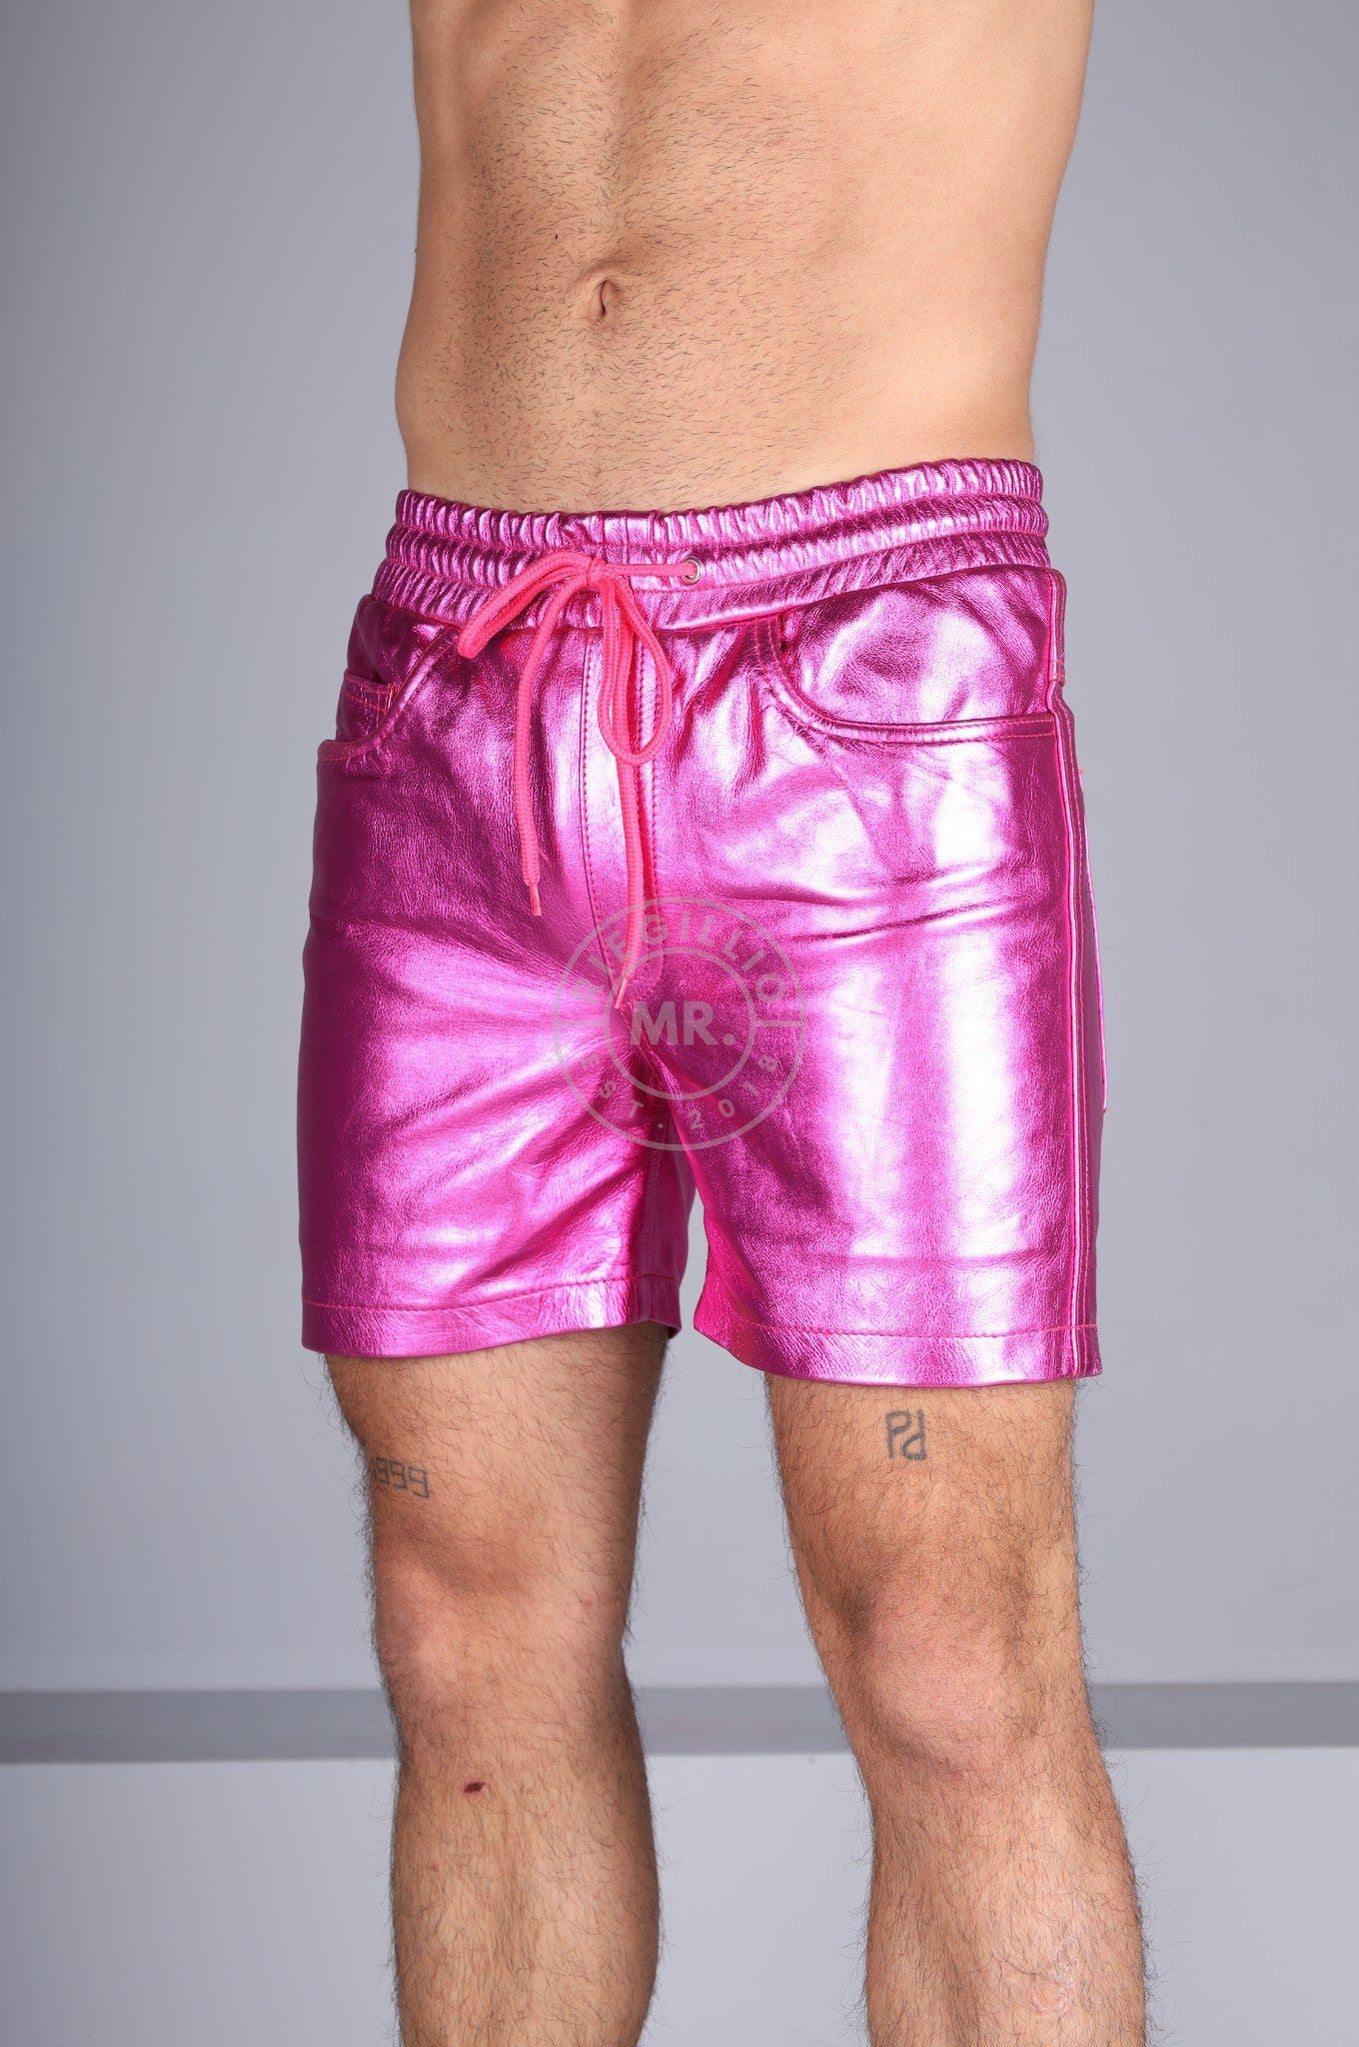 Metallic Leather Short - Pink at MR. Riegillio